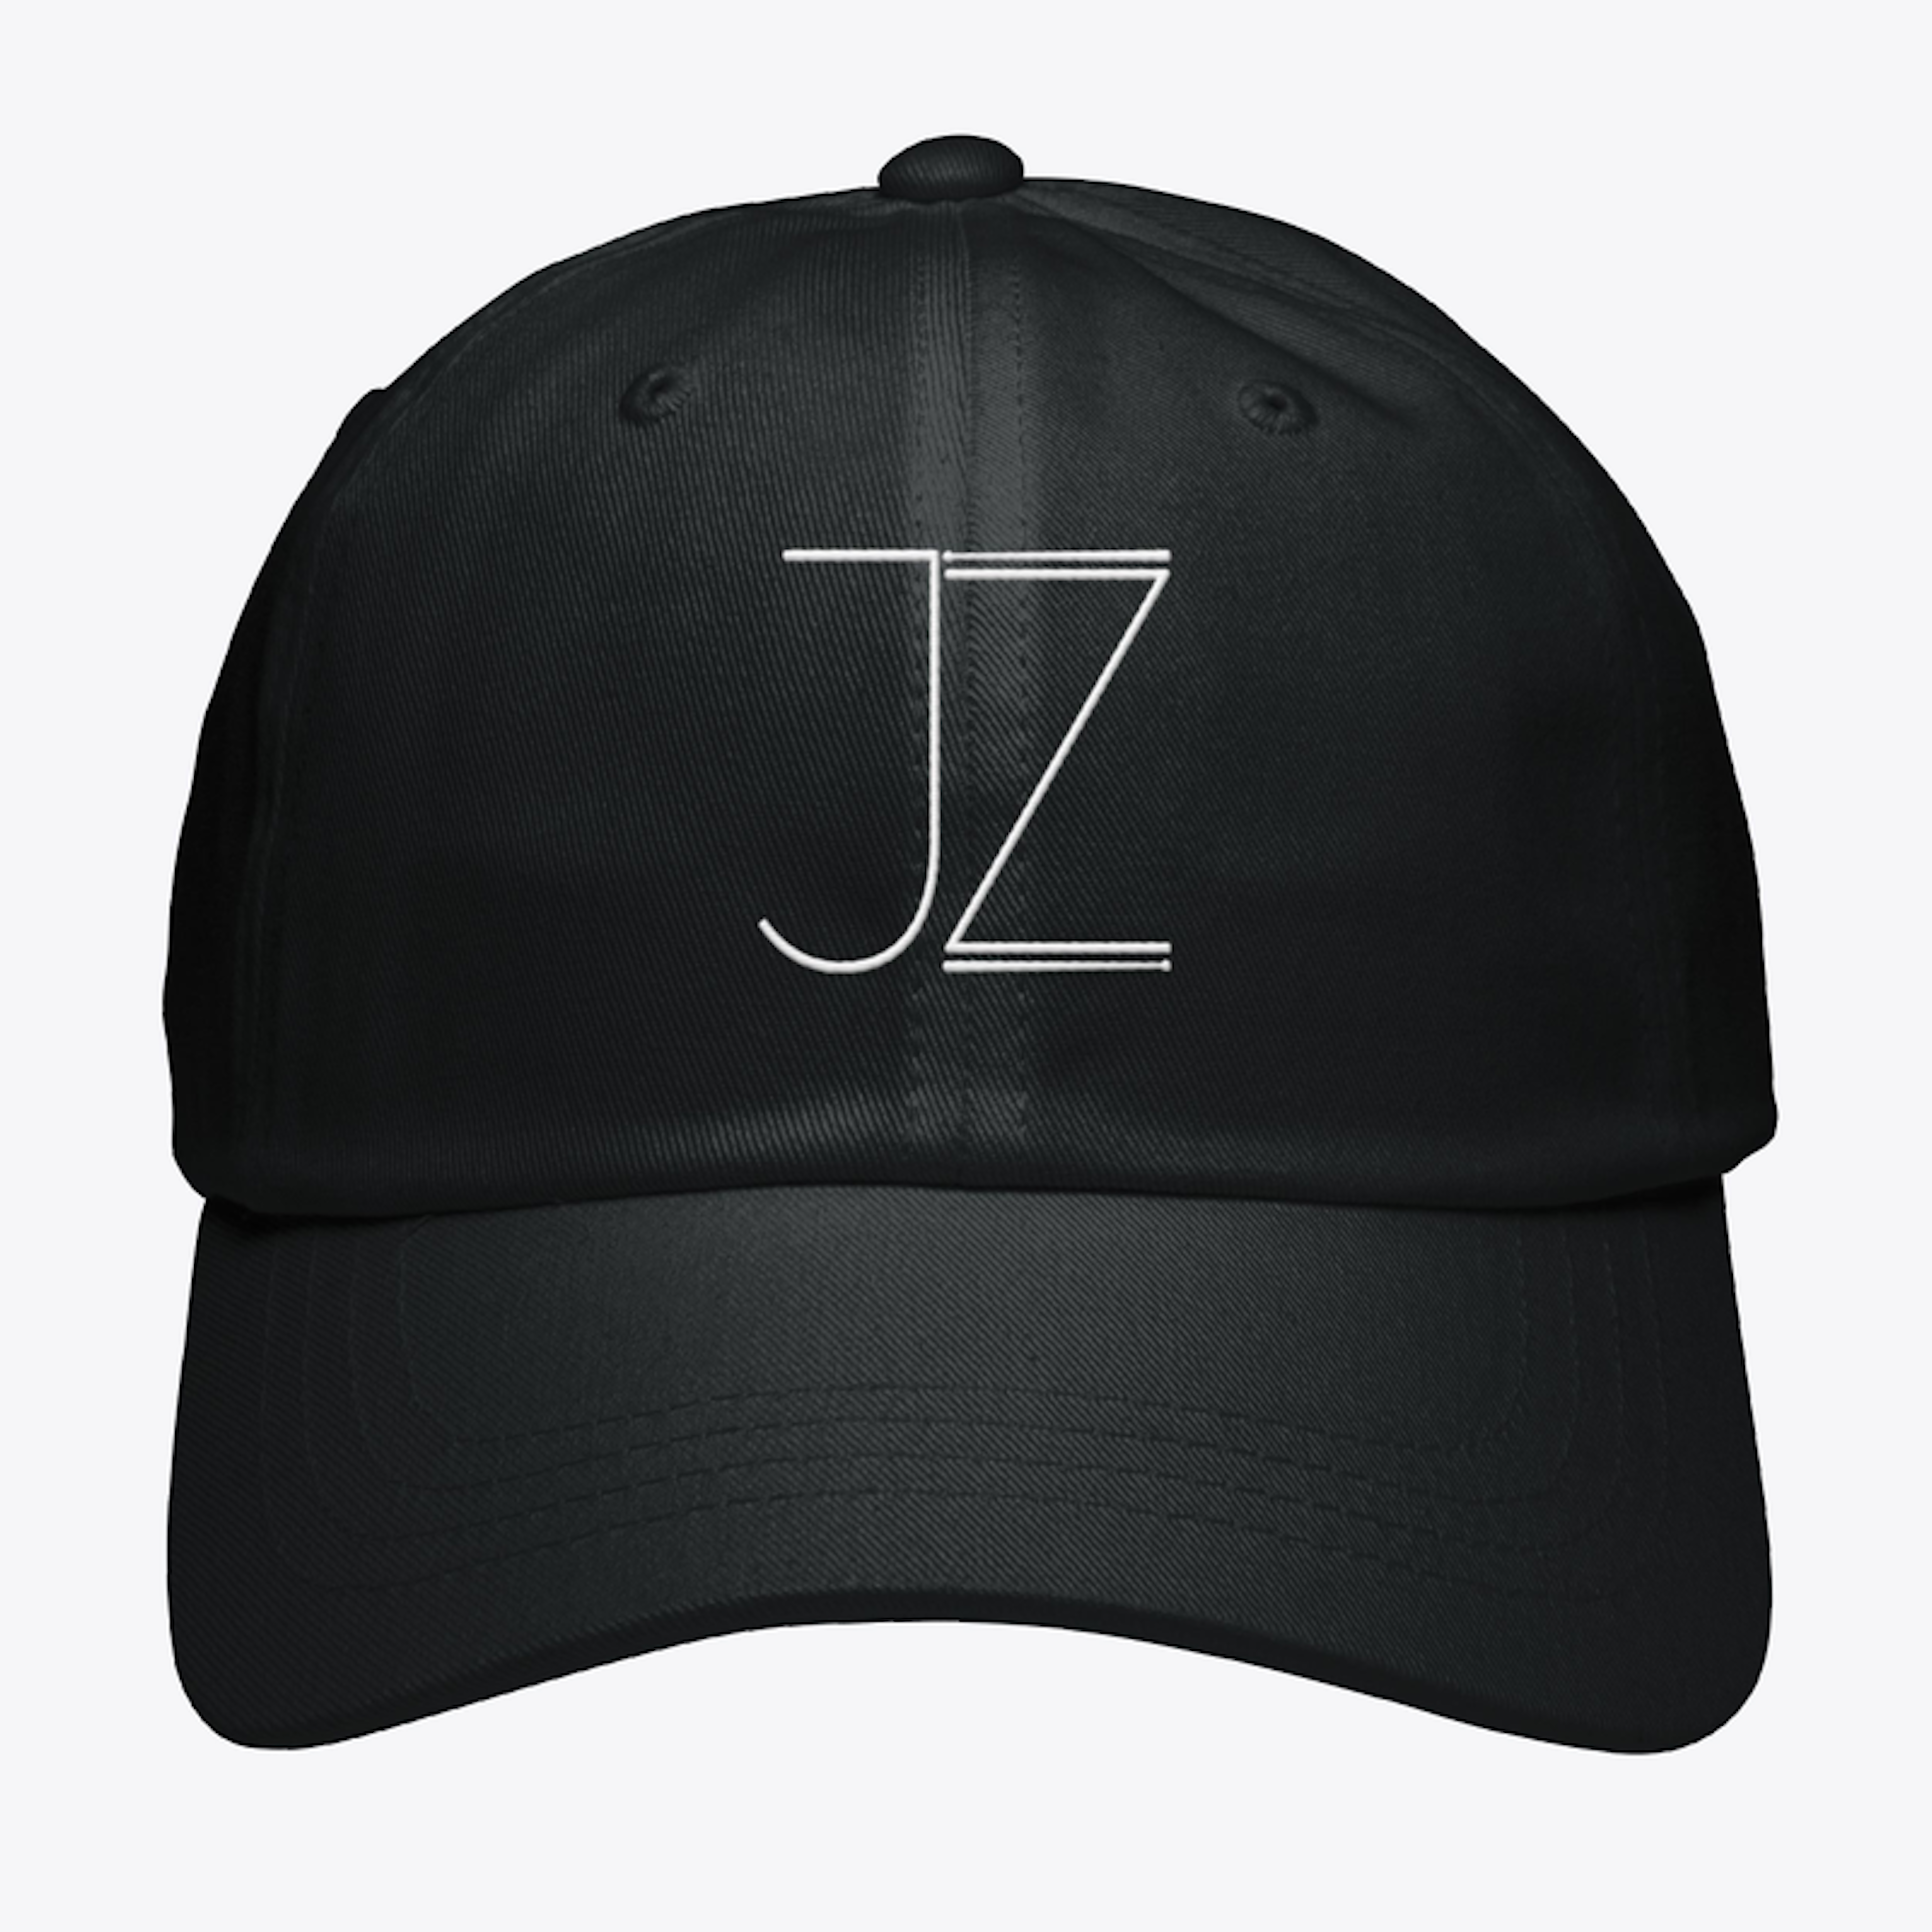 JZ logo dad hat